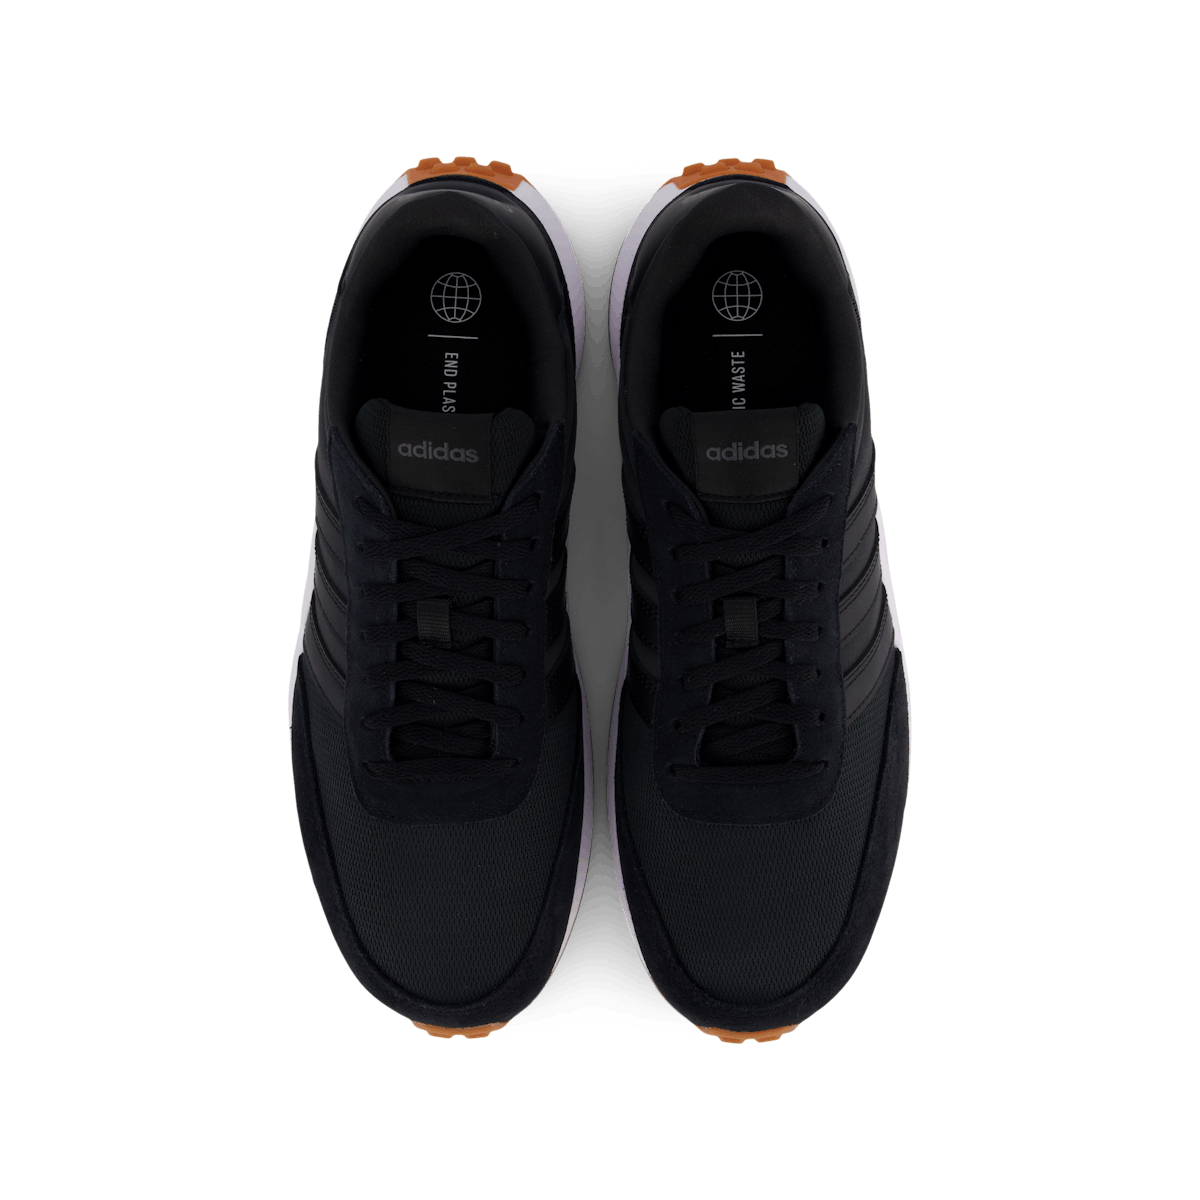 Run 70s Lifestyle Running Shoes Carbon / Core Black / Cloud White